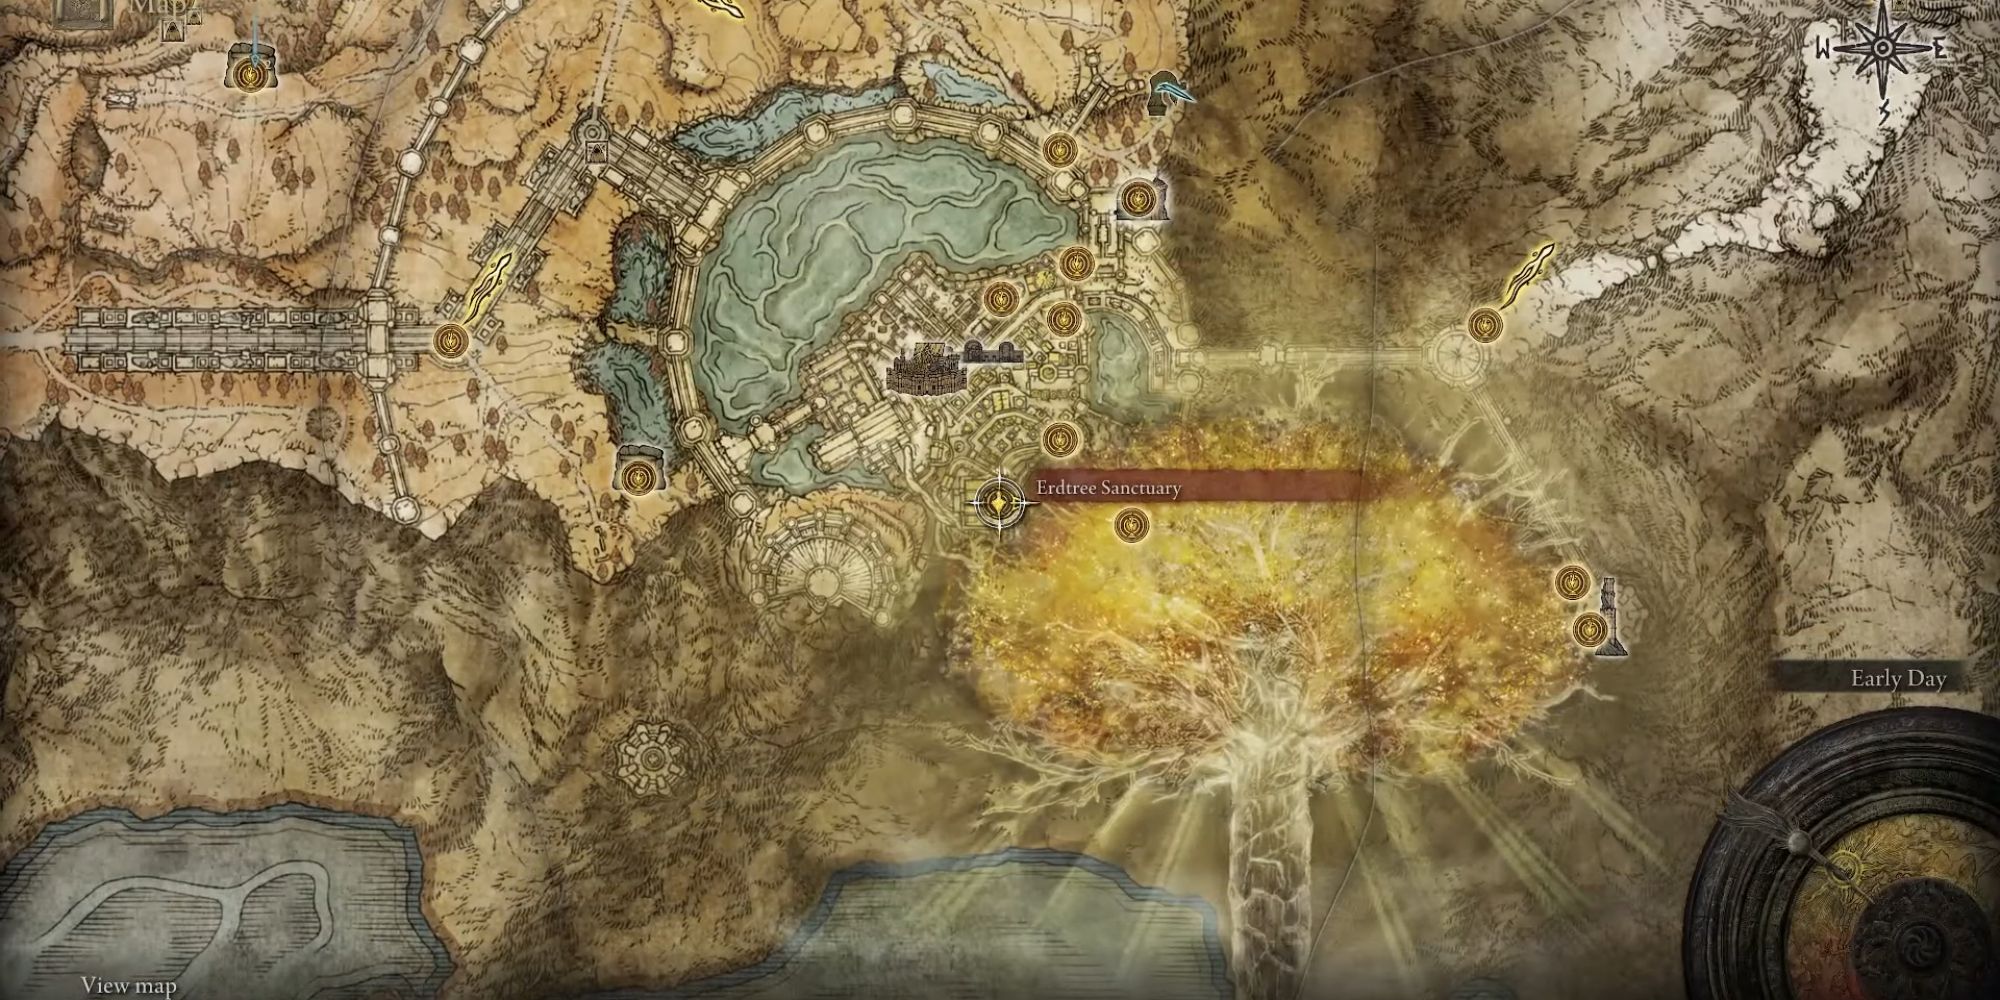 Erdtree sanctuary on the elden ring map